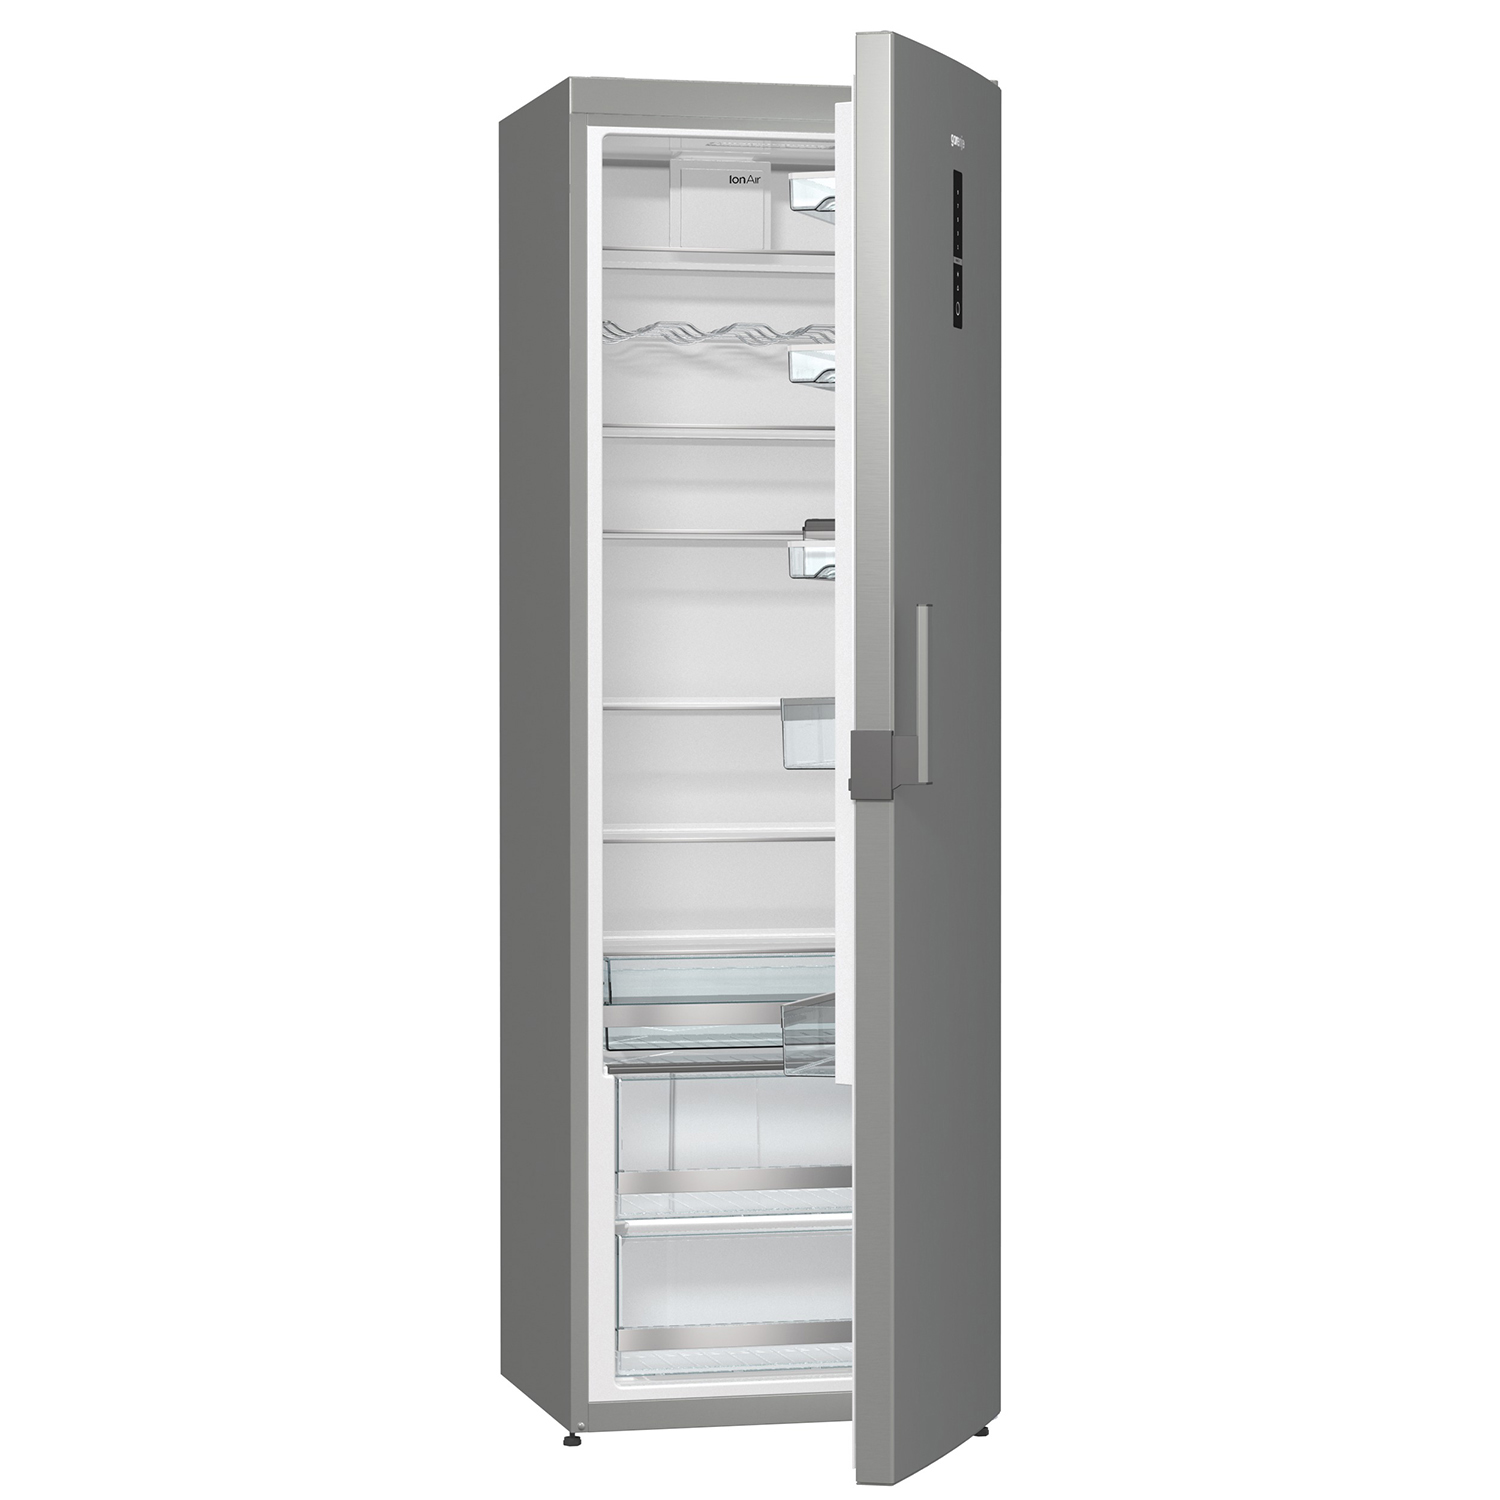 R6192LX - Gorenje Freestanding refrigerator R6192LX